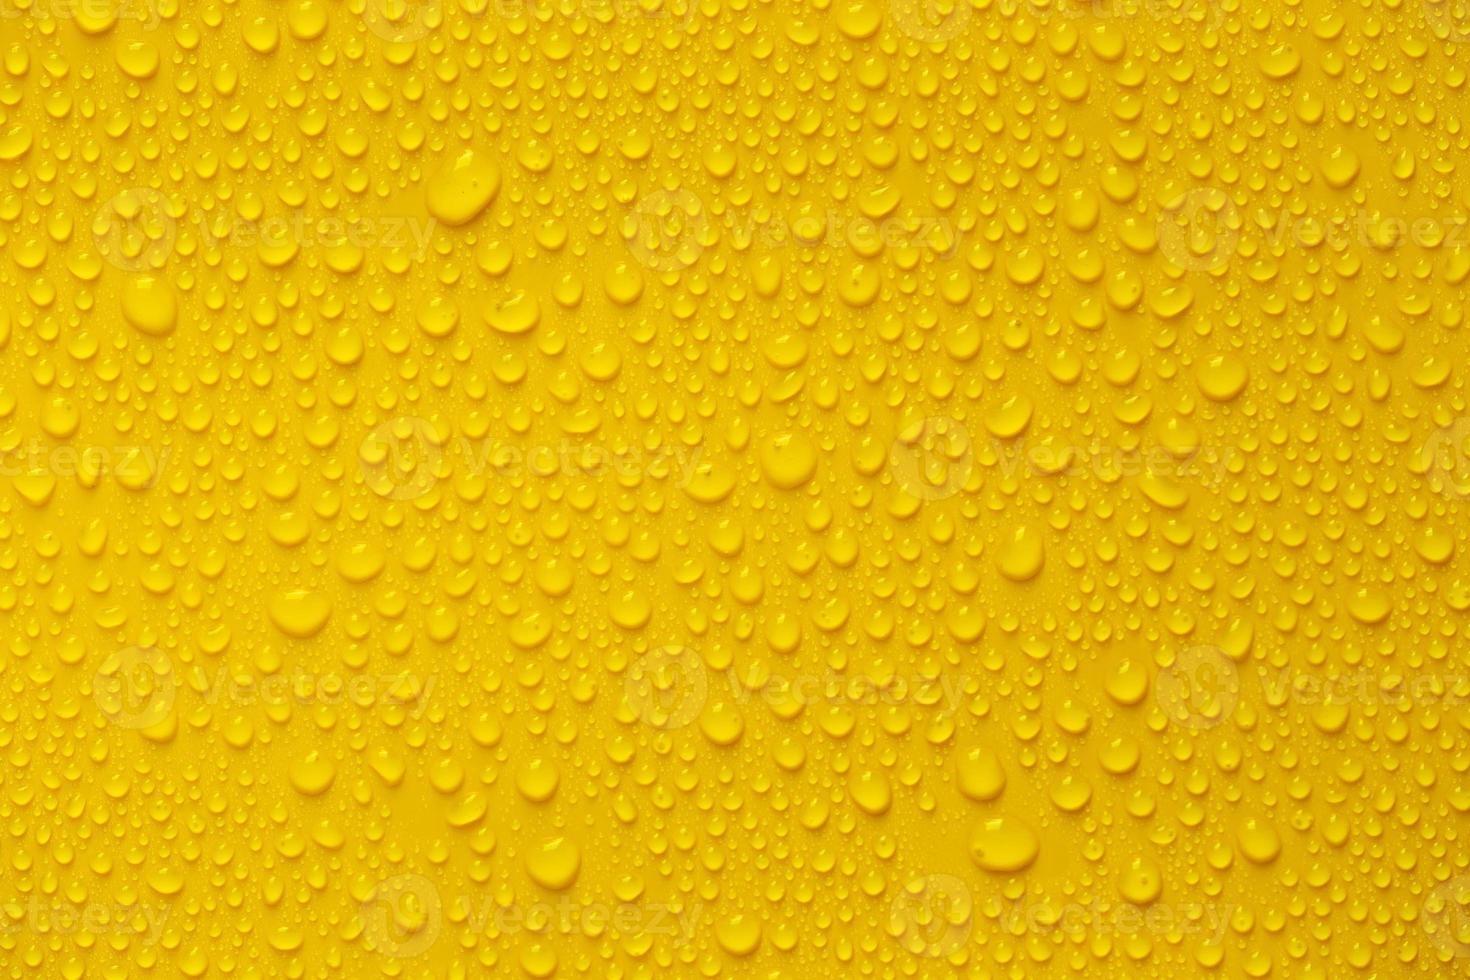 regn eller vattendroppar på gul bakgrund foto